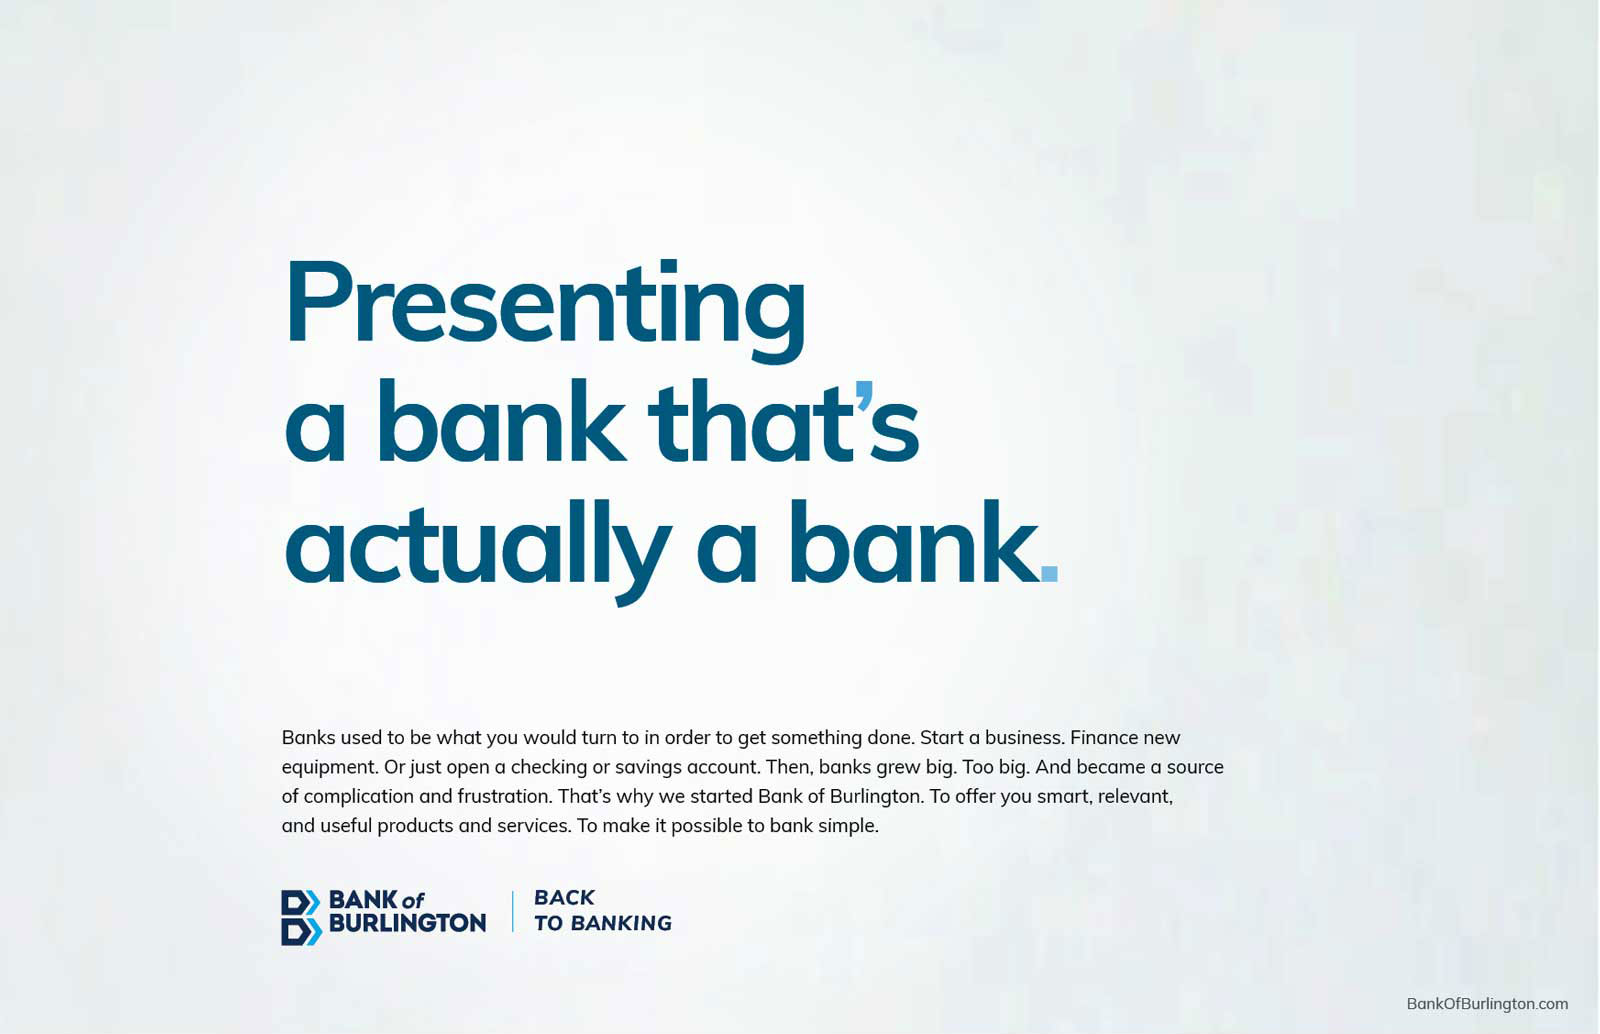 Bank of Burlington - Presenting a bank...